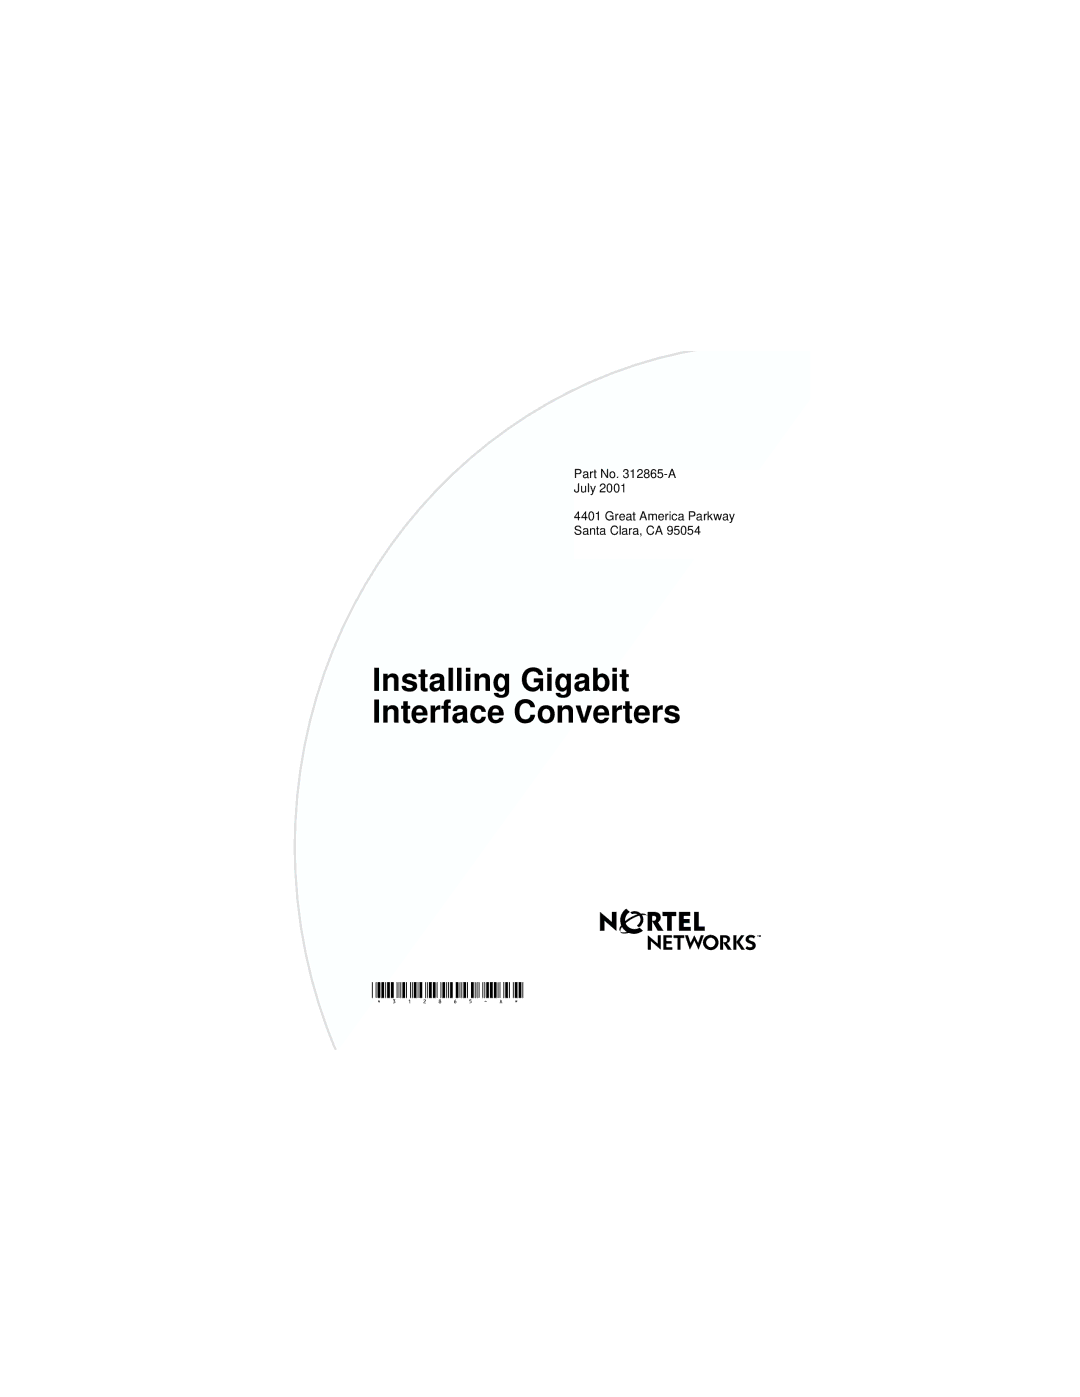 Nortel Networks 312865-A manual Installing Gigabit Interface Converters 